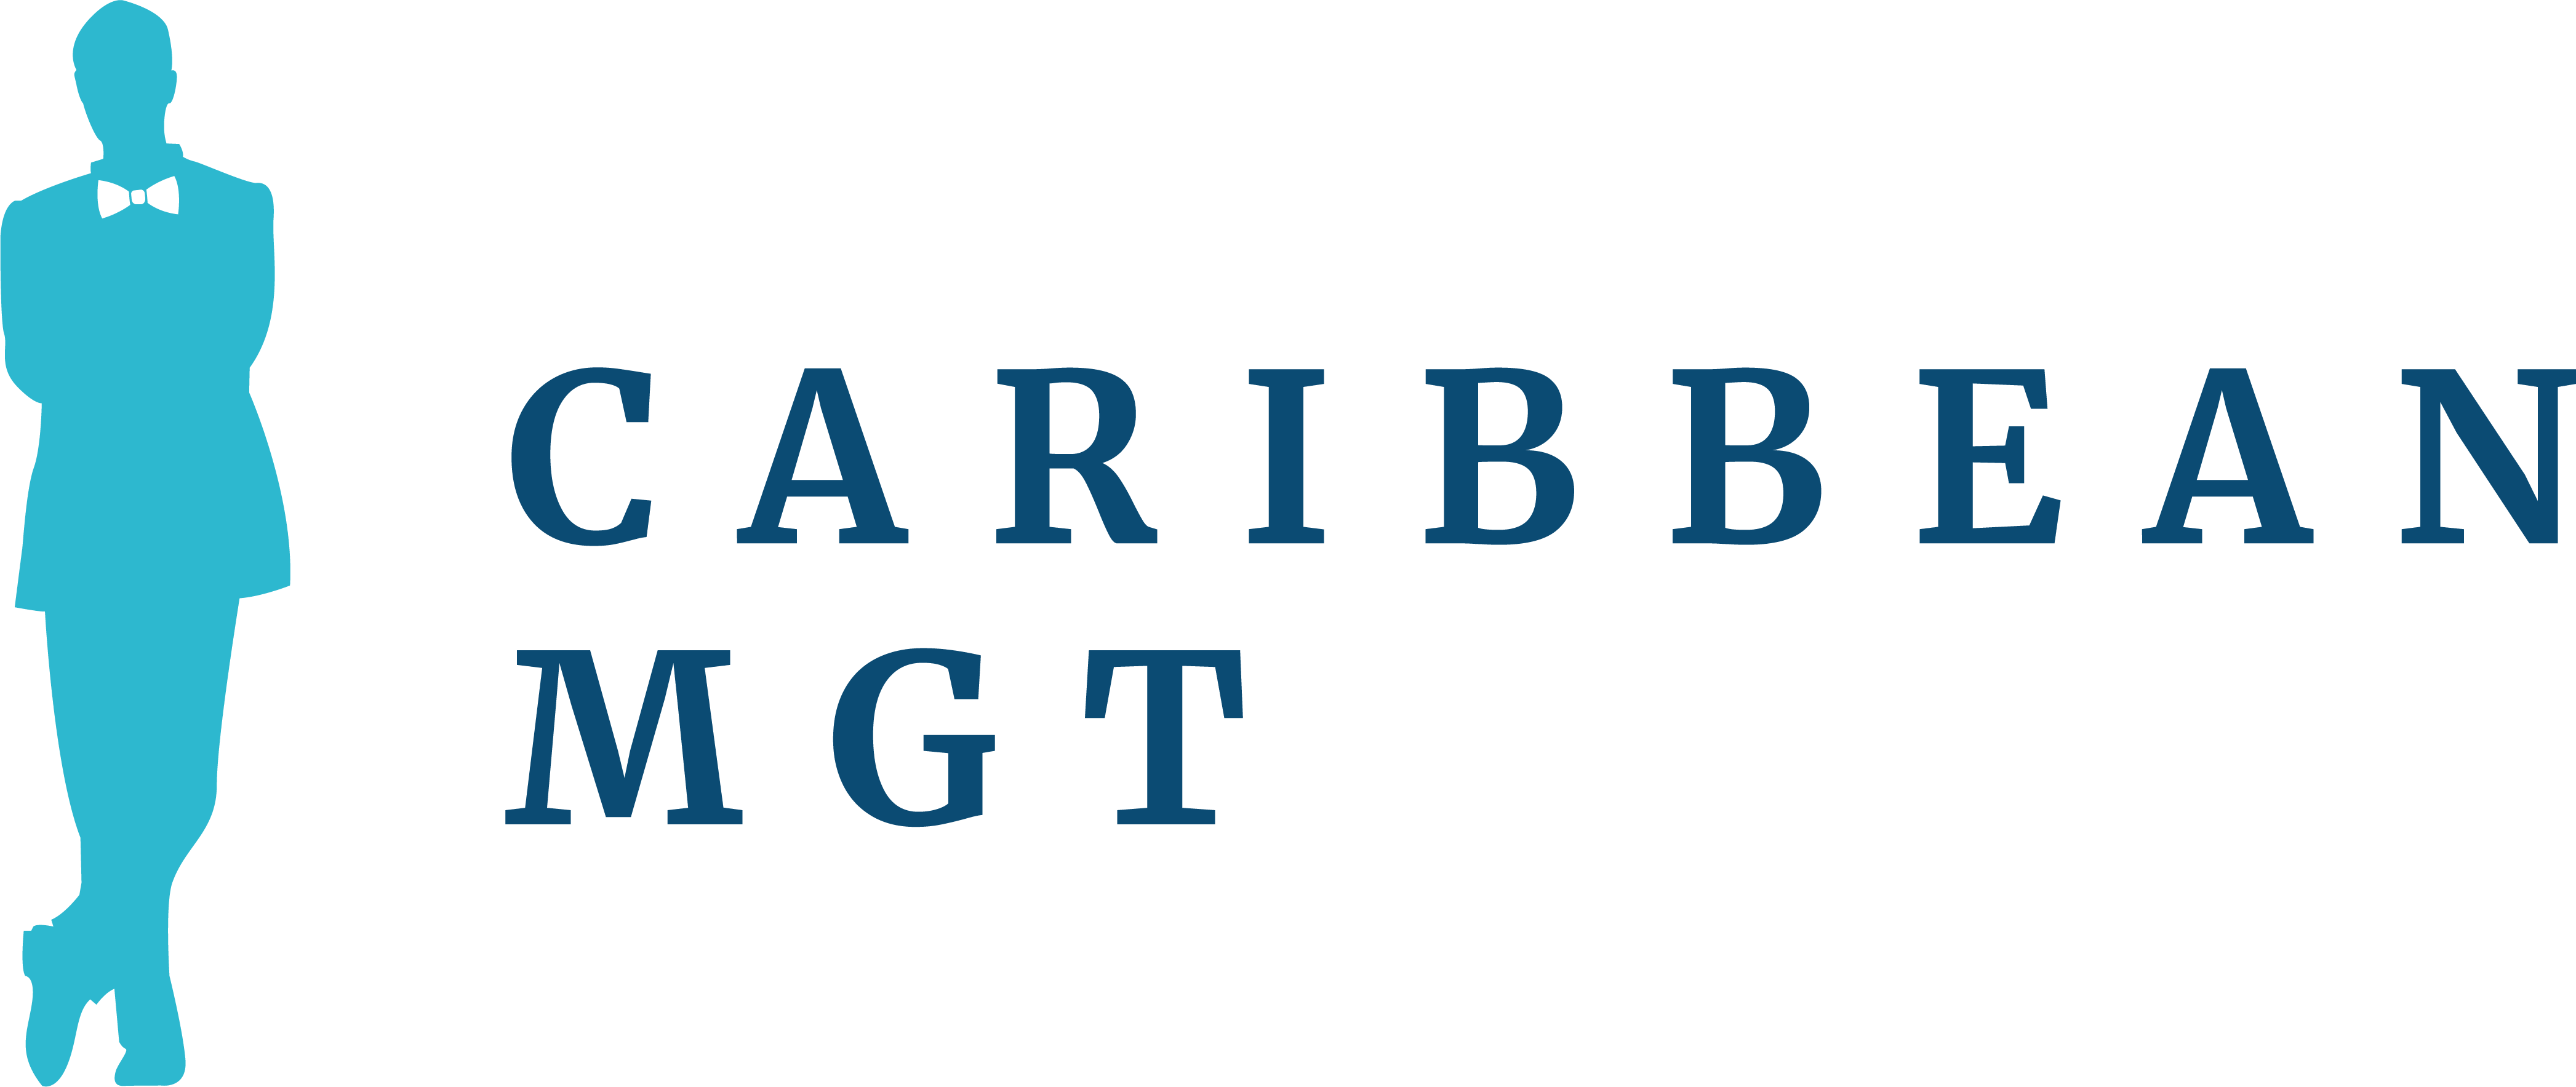 CaribbeanMGT Ltd.